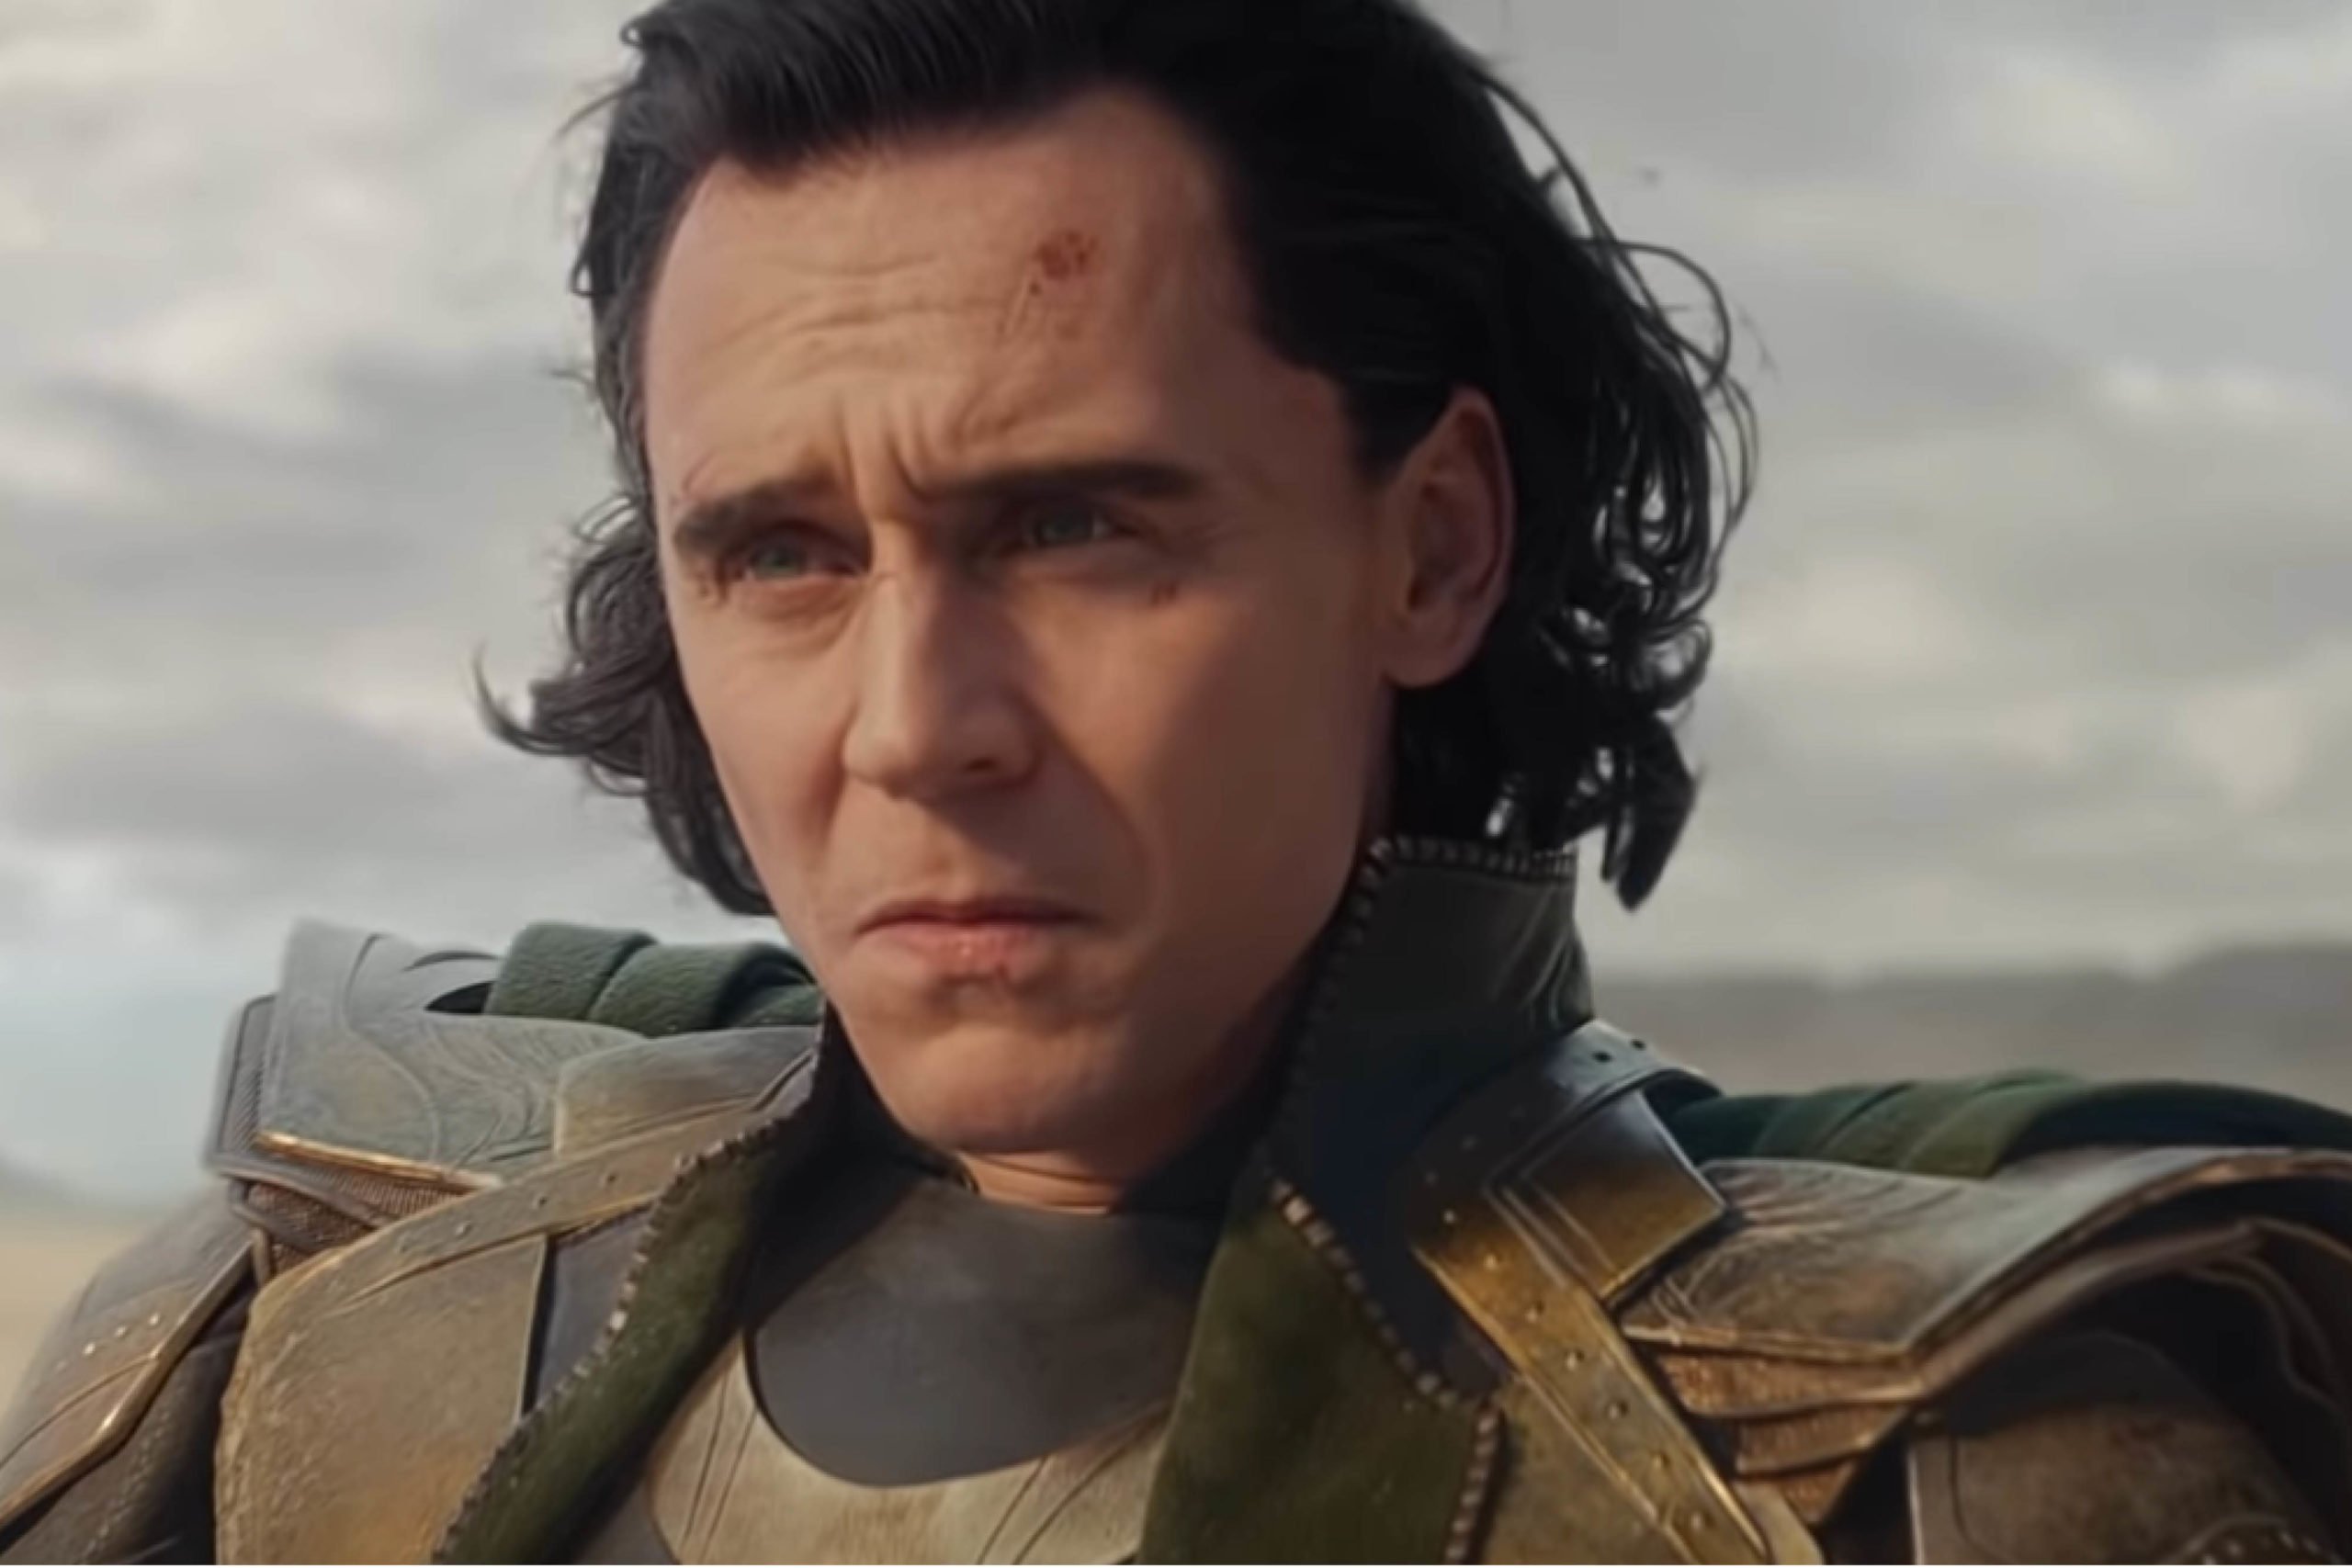 Disney+ : la série Loki se dévoile (un petit peu)